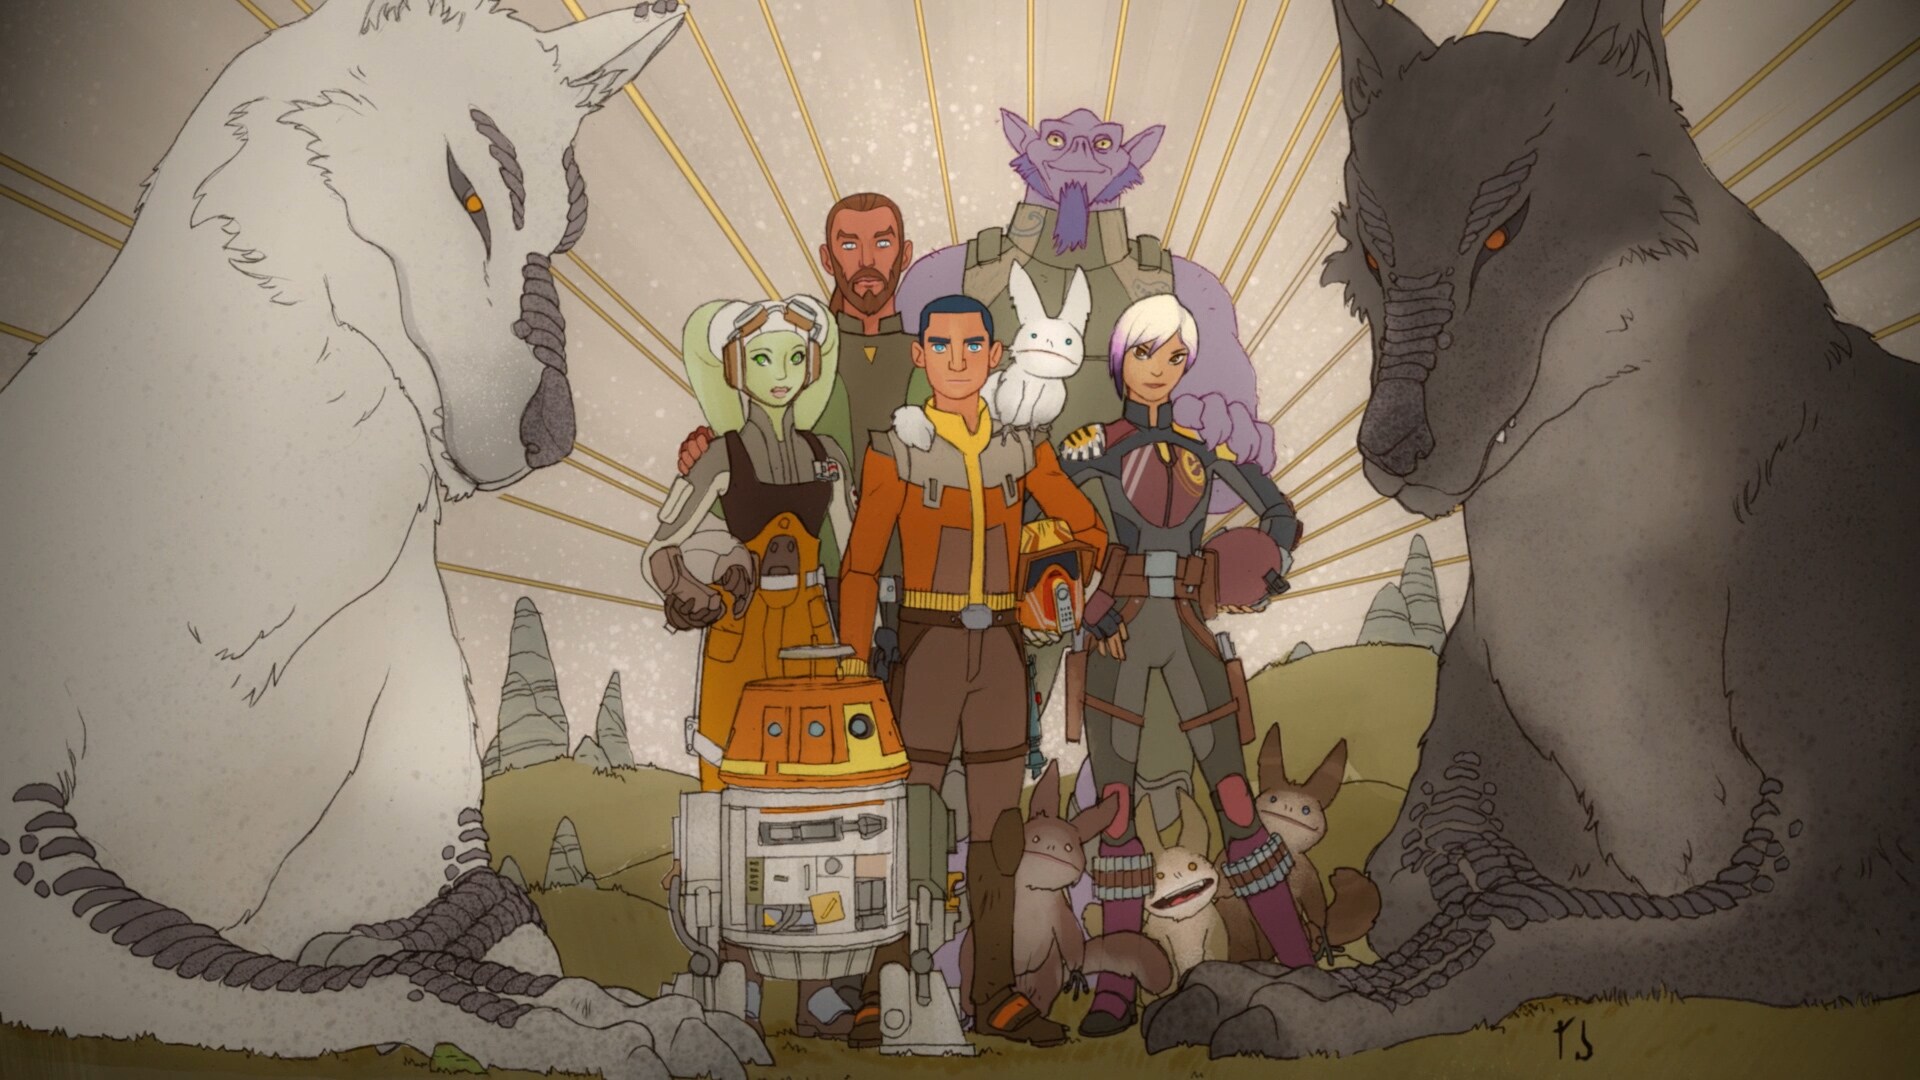 Star Wars Rebels - "Epilogue" Audio Cue